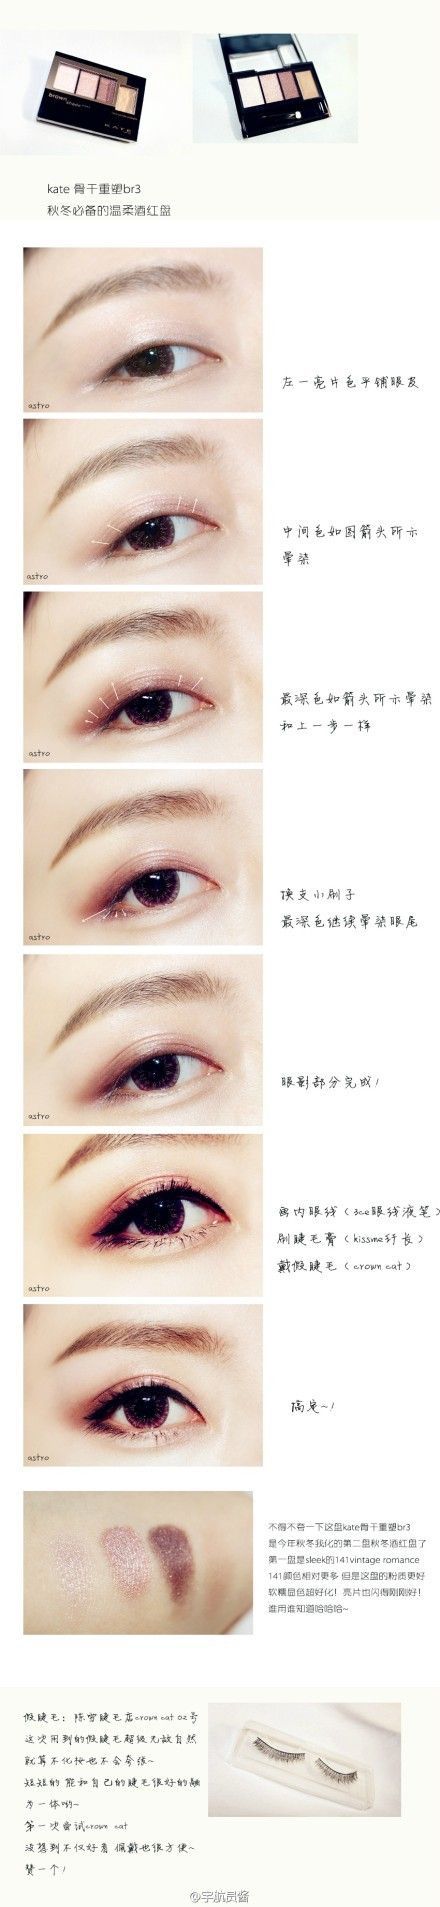 makeup-tutorial-for-asian-chinese-69_13 Make - up tutorial voor Aziatisch Chinees